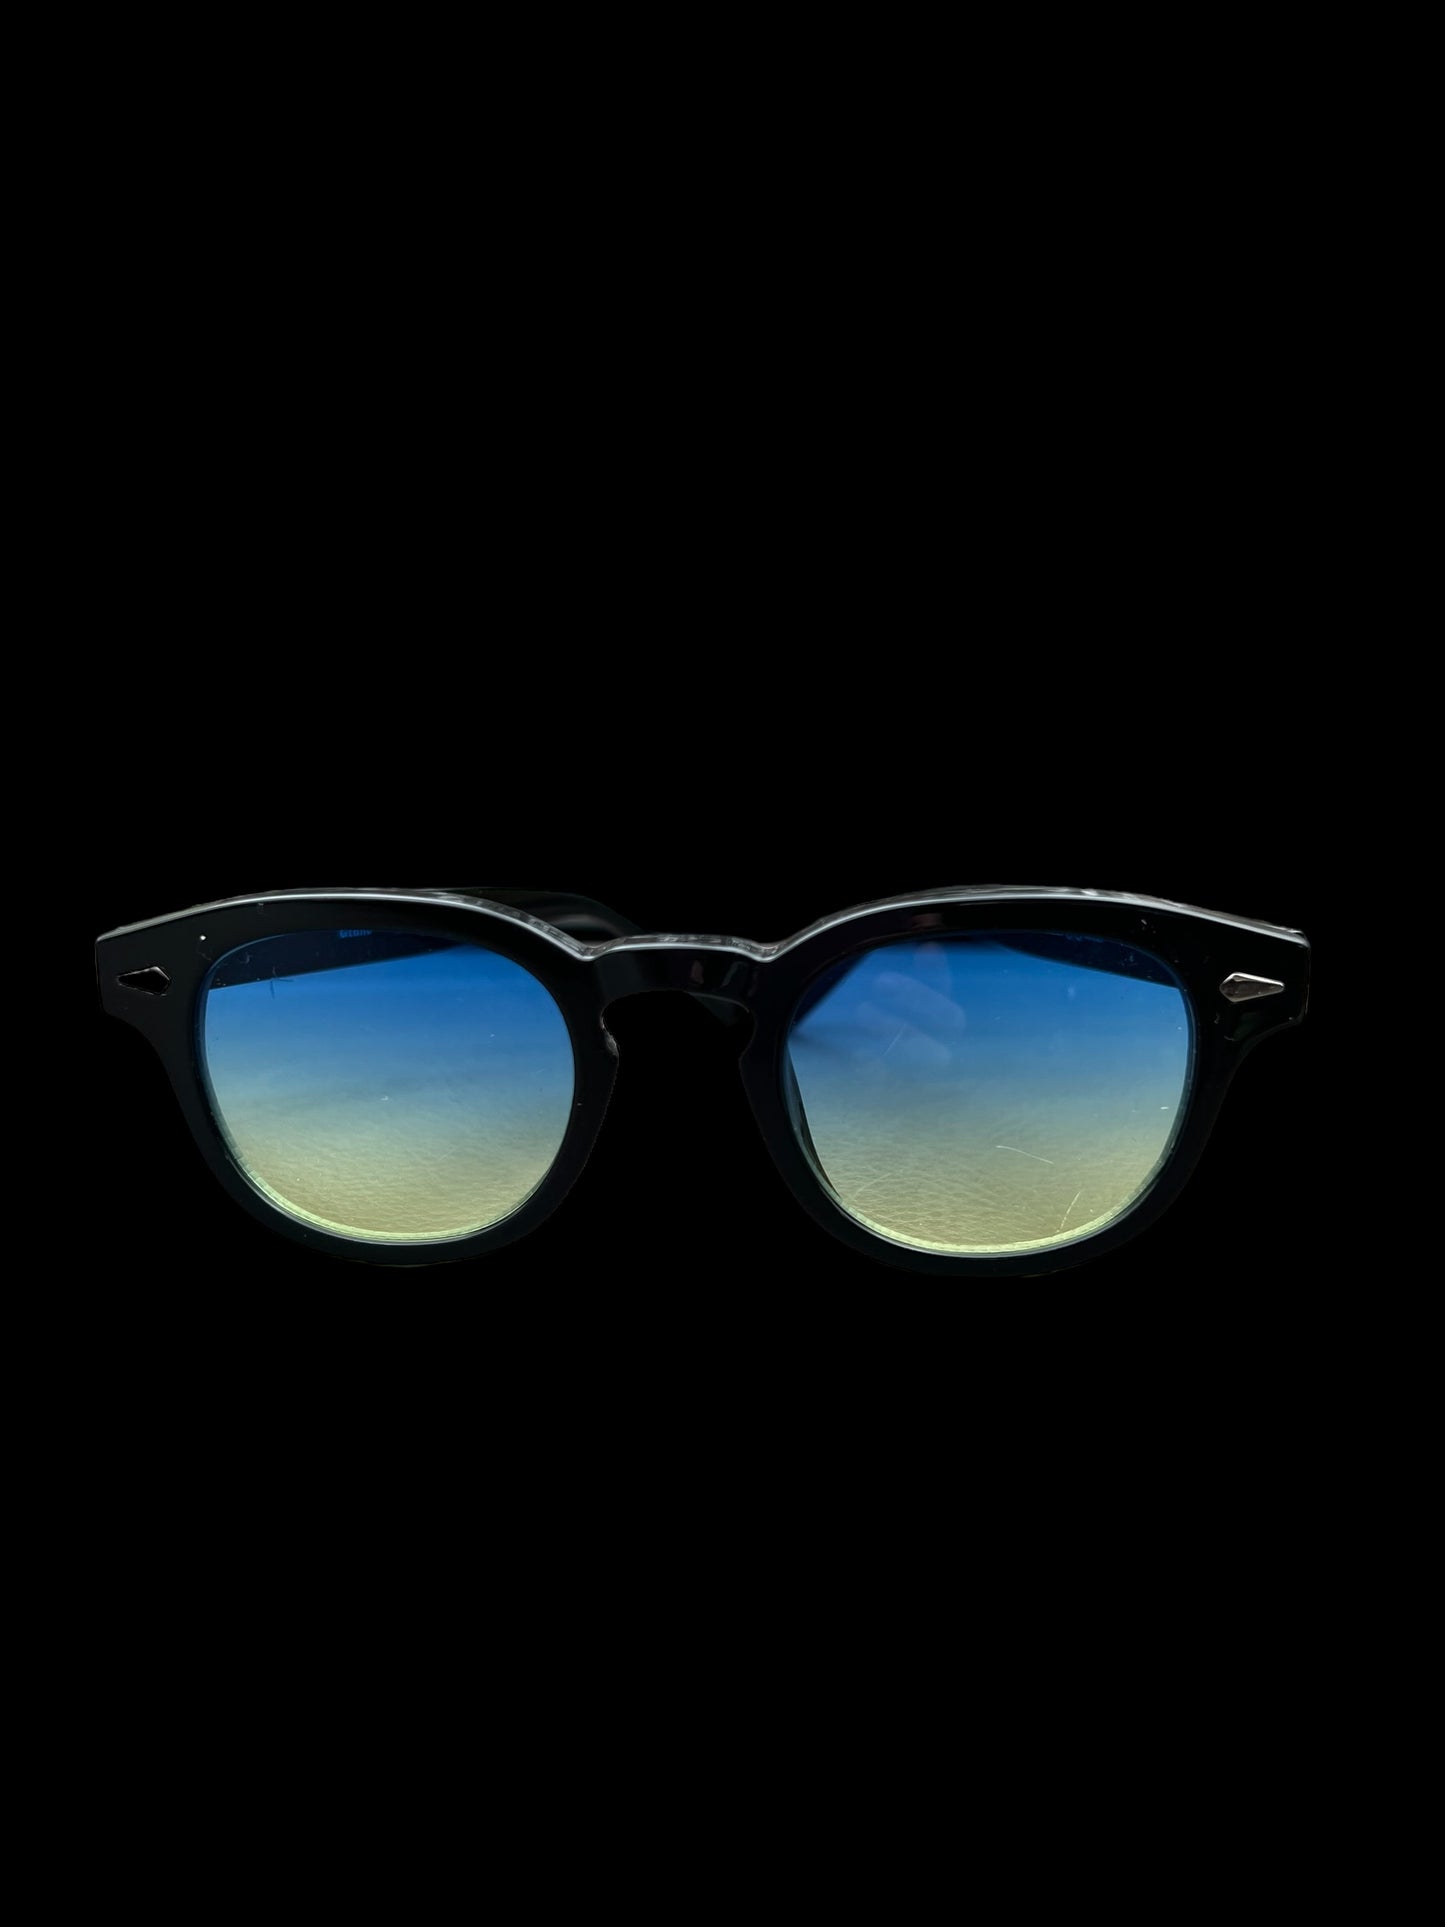 Sunglasses